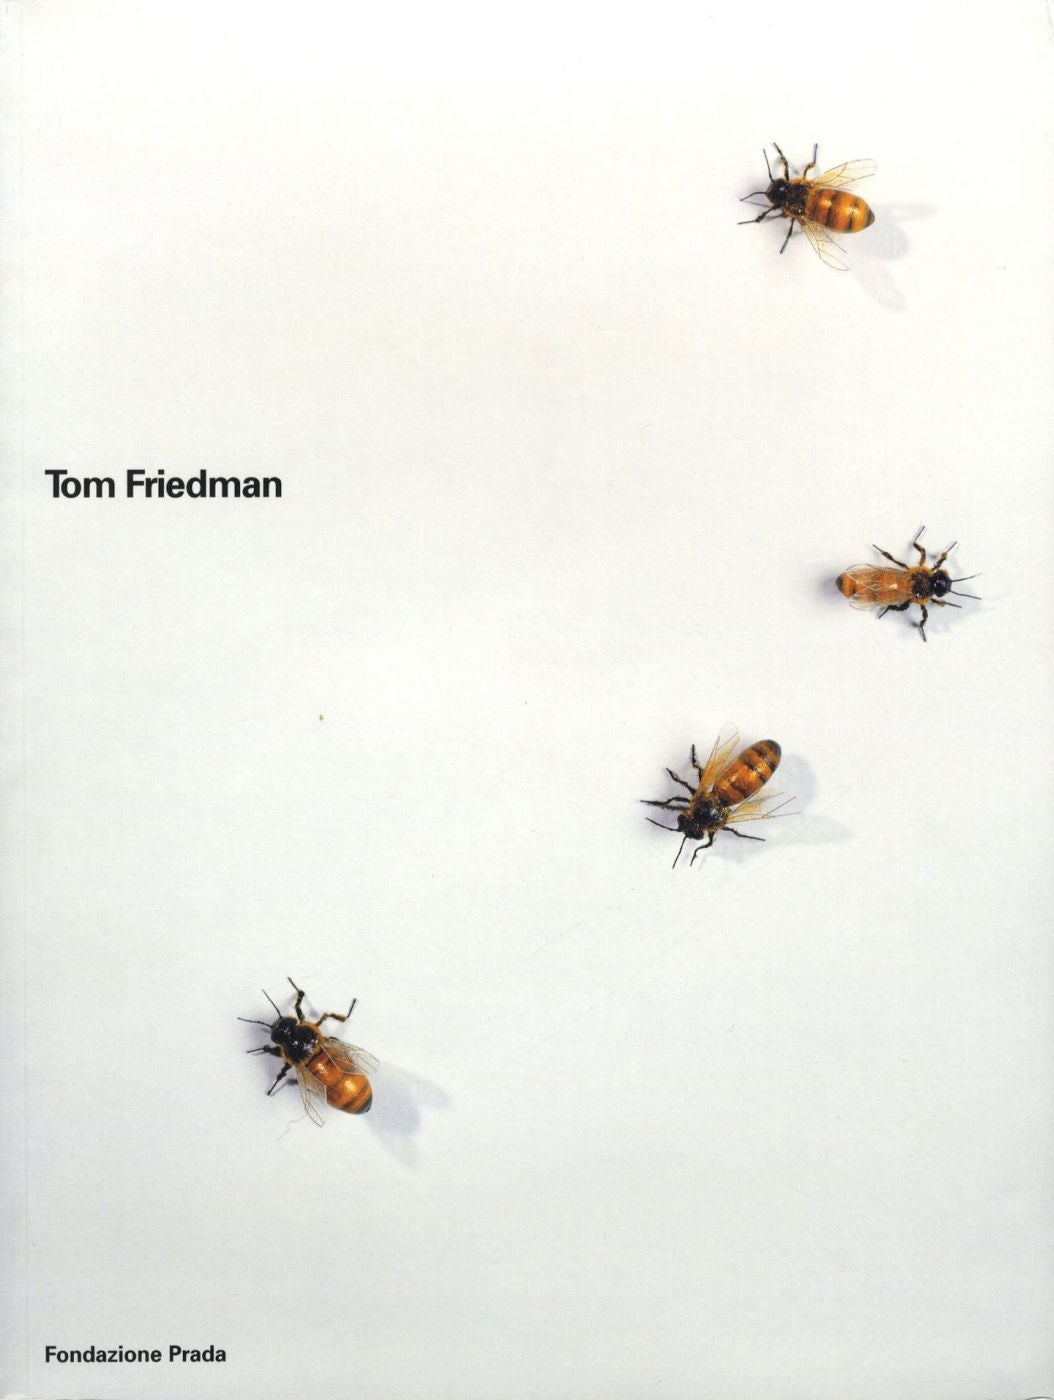 Tom Friedman (Fondazione Prada, Slipcased Two Volume Set)